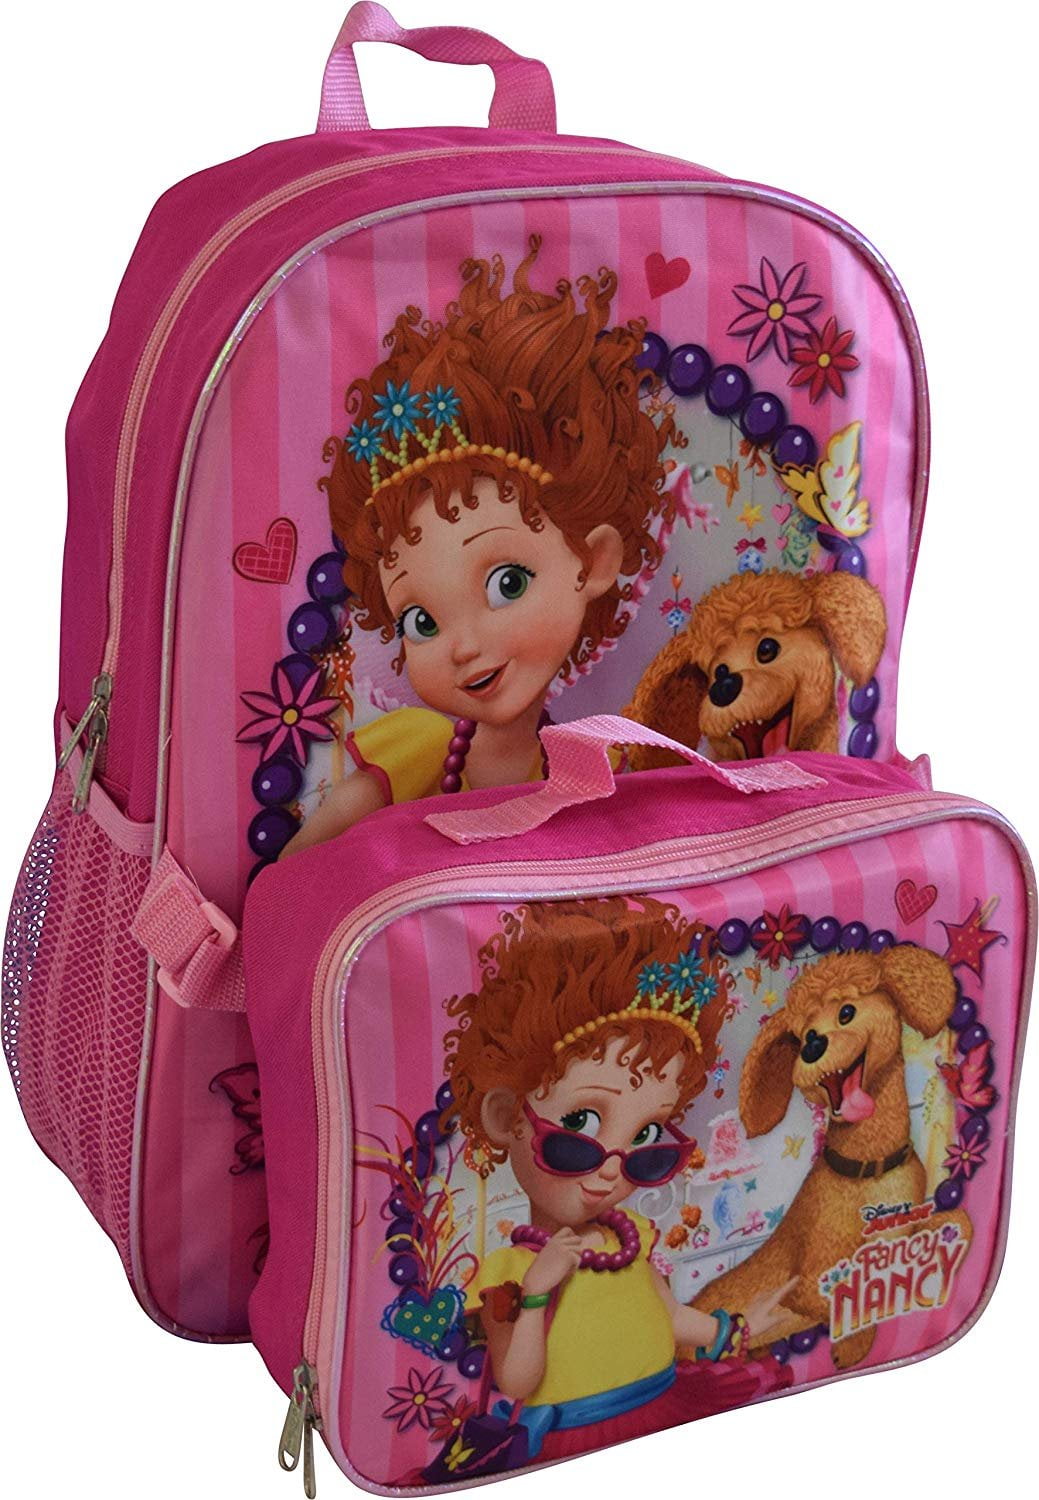 Girls Fancy Nancy Backpack 16" & Insulated Lunch Bag w/Shoulder Strap 